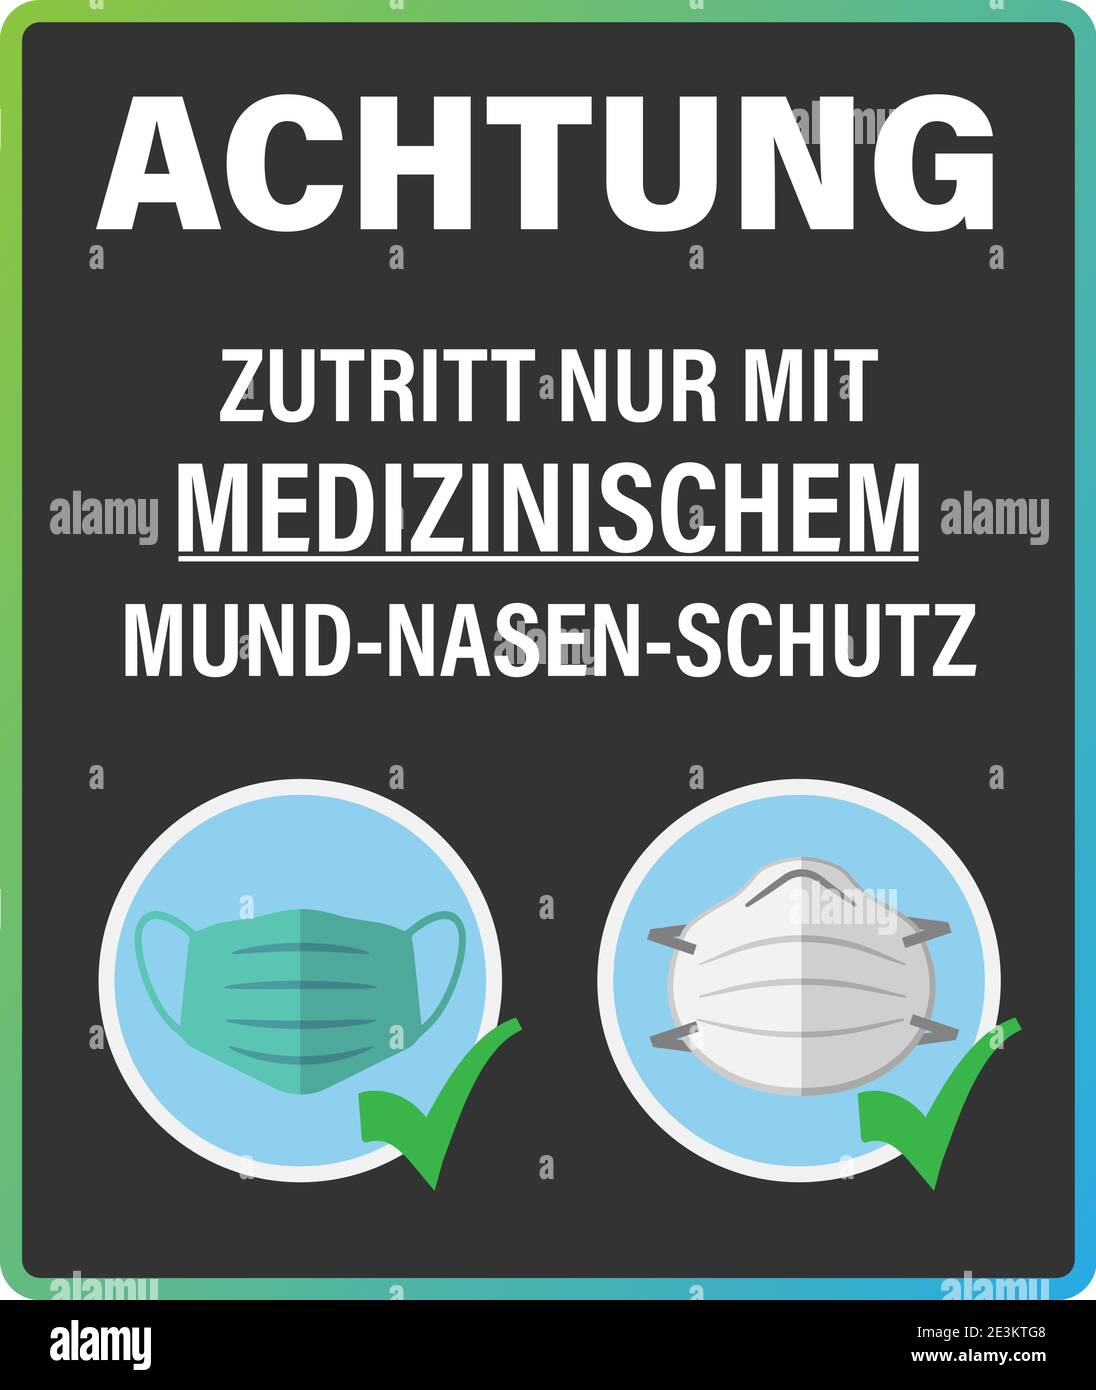 sign or poster with text ZUTRITT NUR MIT MEDIZINISCHEM MUND-NASEN-SCHUTZ, German for ACCESS WITH MEDICAL FACE MASK ONLY vector illustration Stock Vector